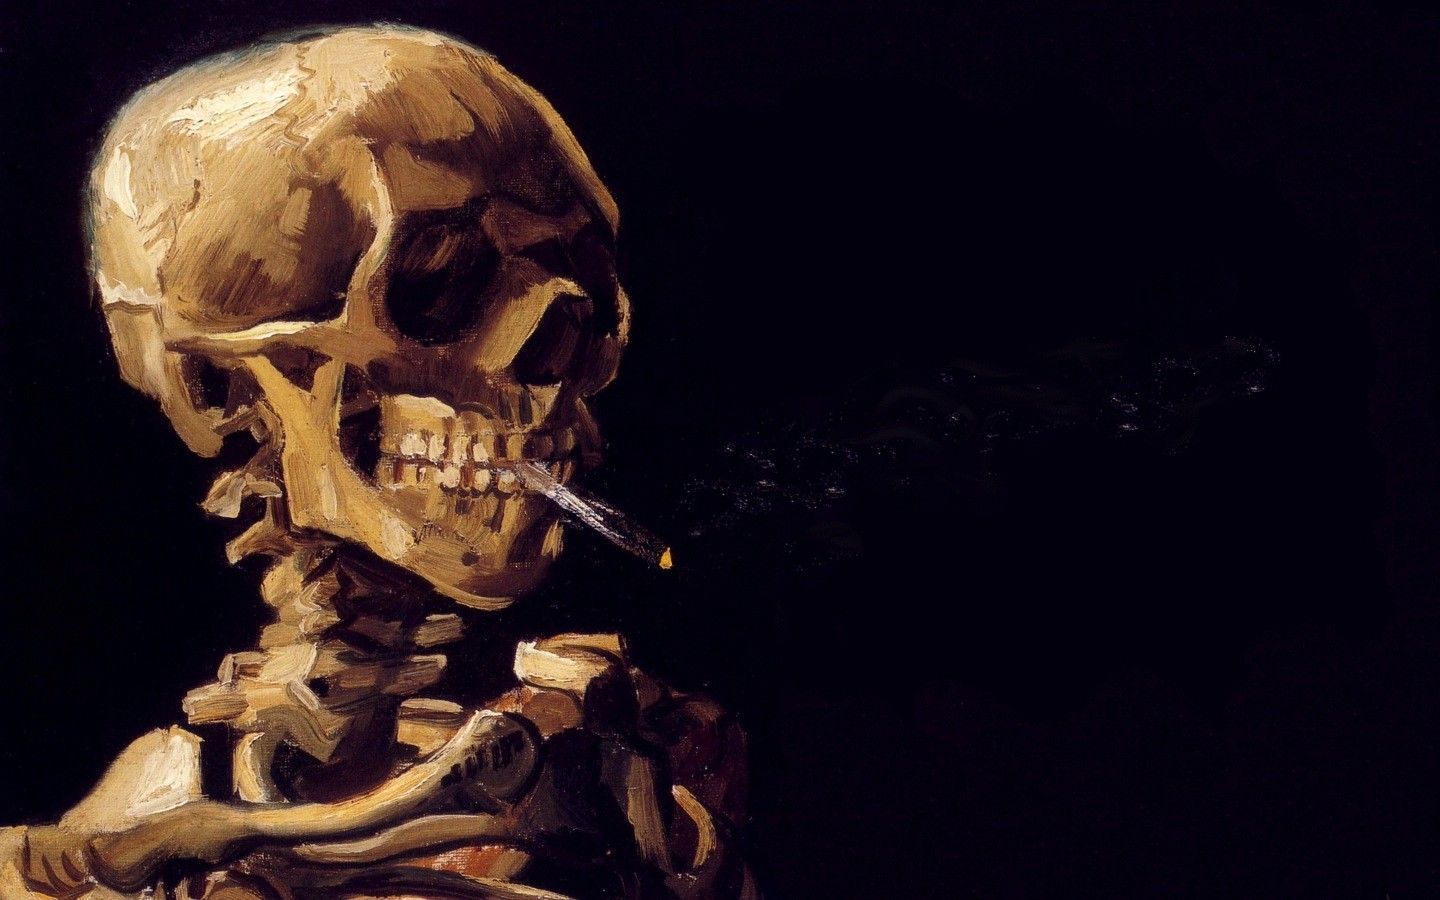 A painting of an old man smoking - Skeleton